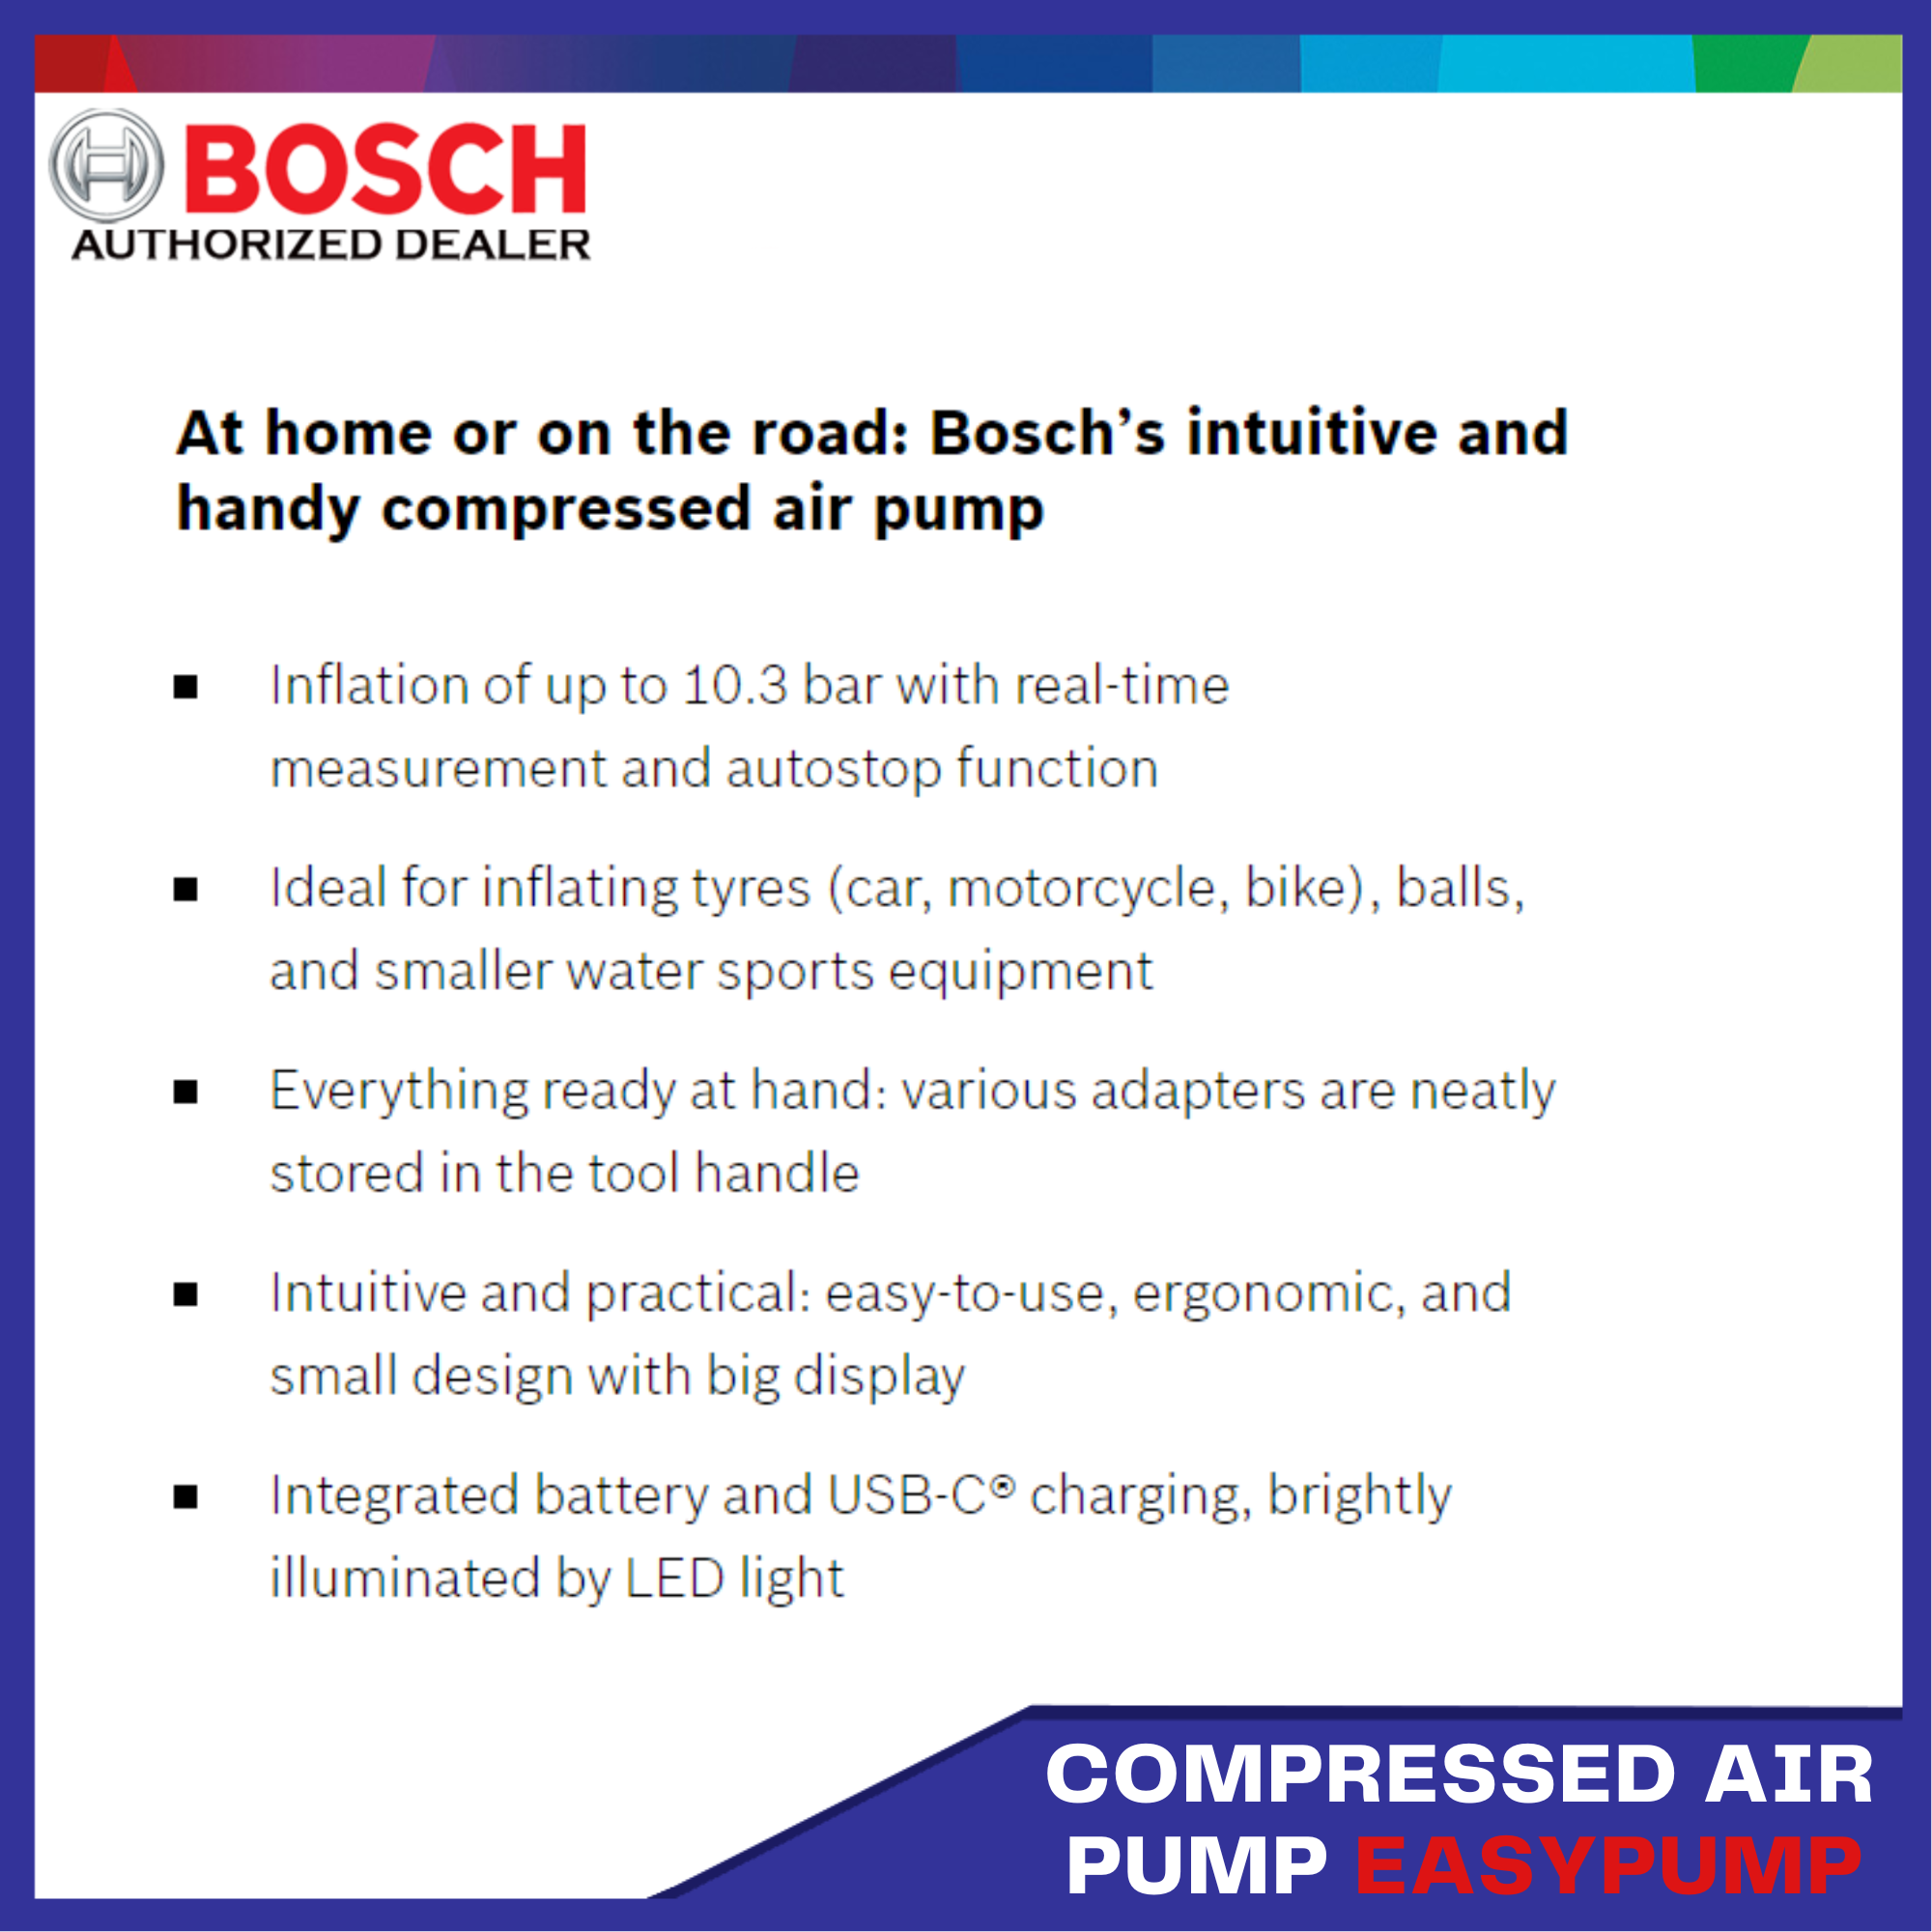 Bosch Cordless Compressed Air Pump 3.6V 3.0Ah 150 PSI Tire Air Pump with  Bag & USB Cable Electric Bike Pump Mini Compressor H&G - 0603947080